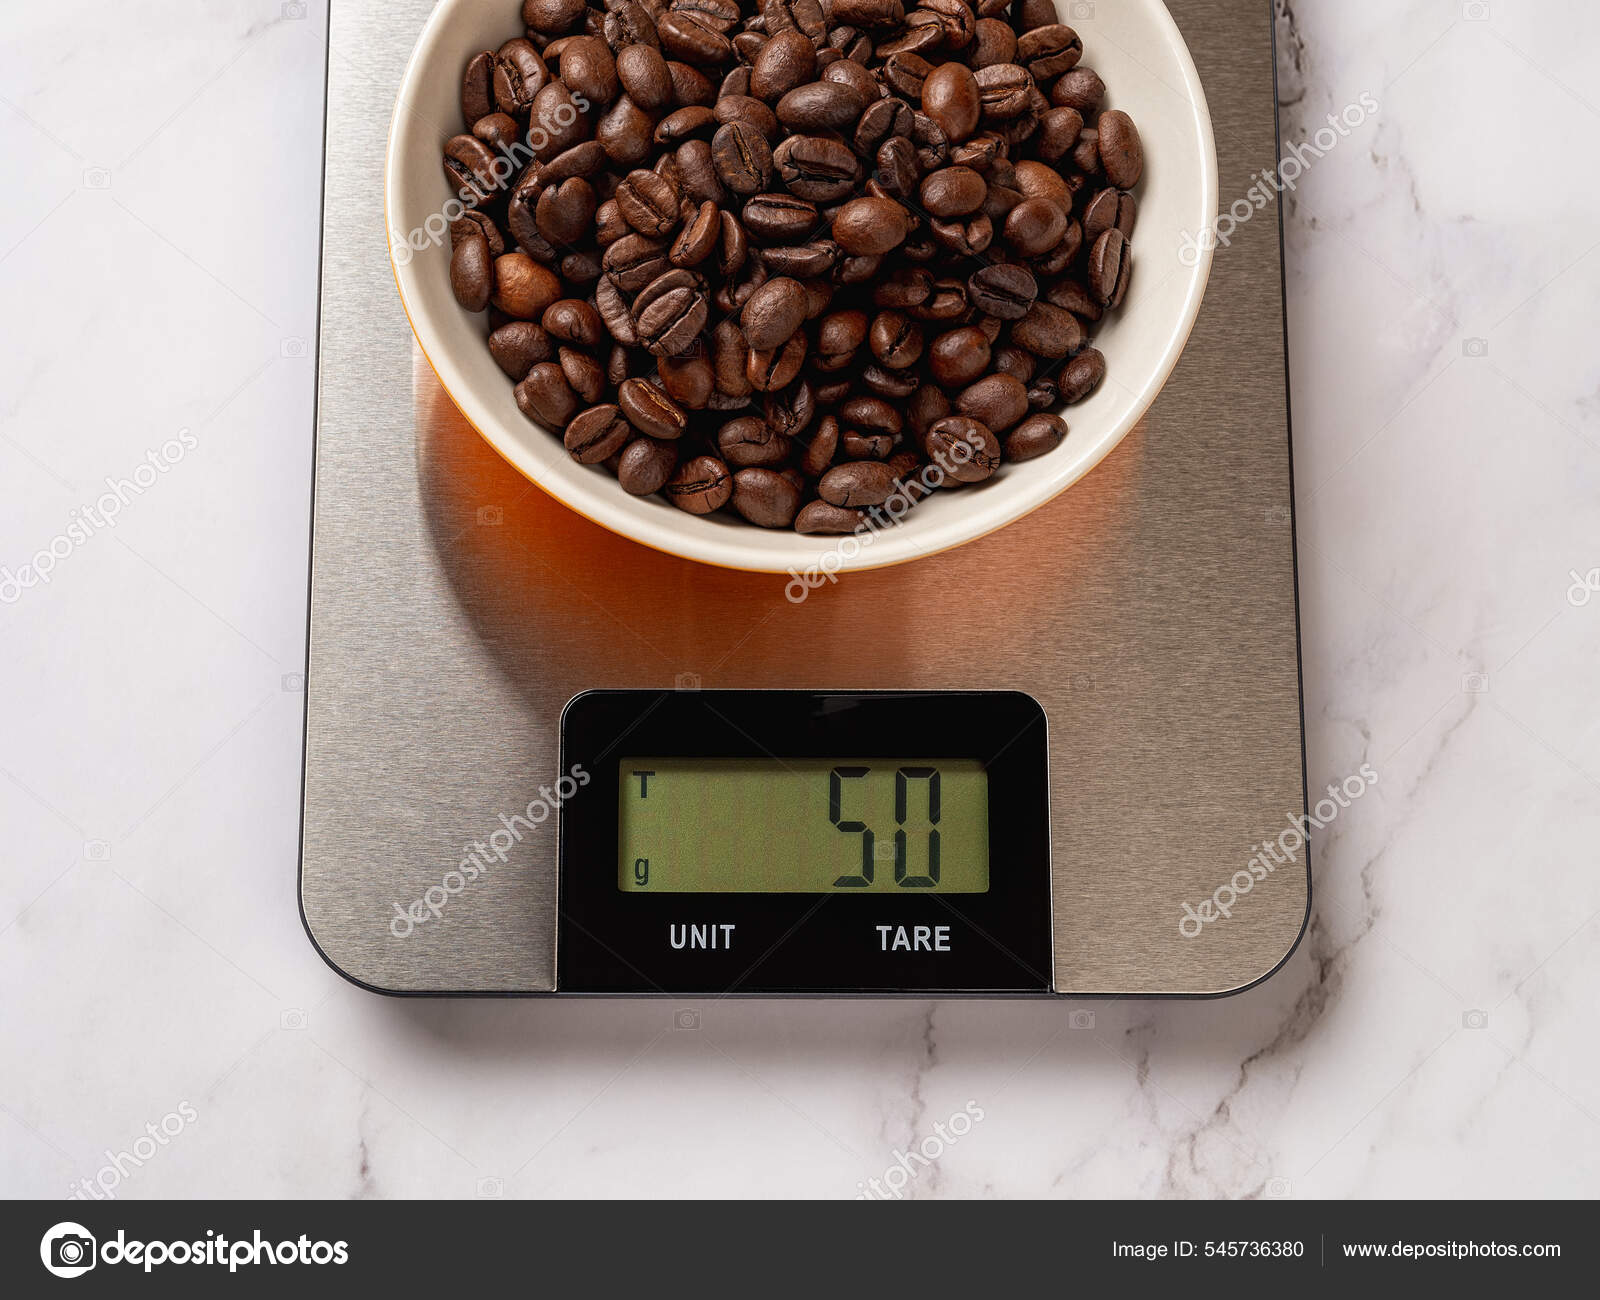 https://st.depositphotos.com/17792808/54573/i/1600/depositphotos_545736380-stock-photo-roasted-coffee-beans-bowl-digital.jpg